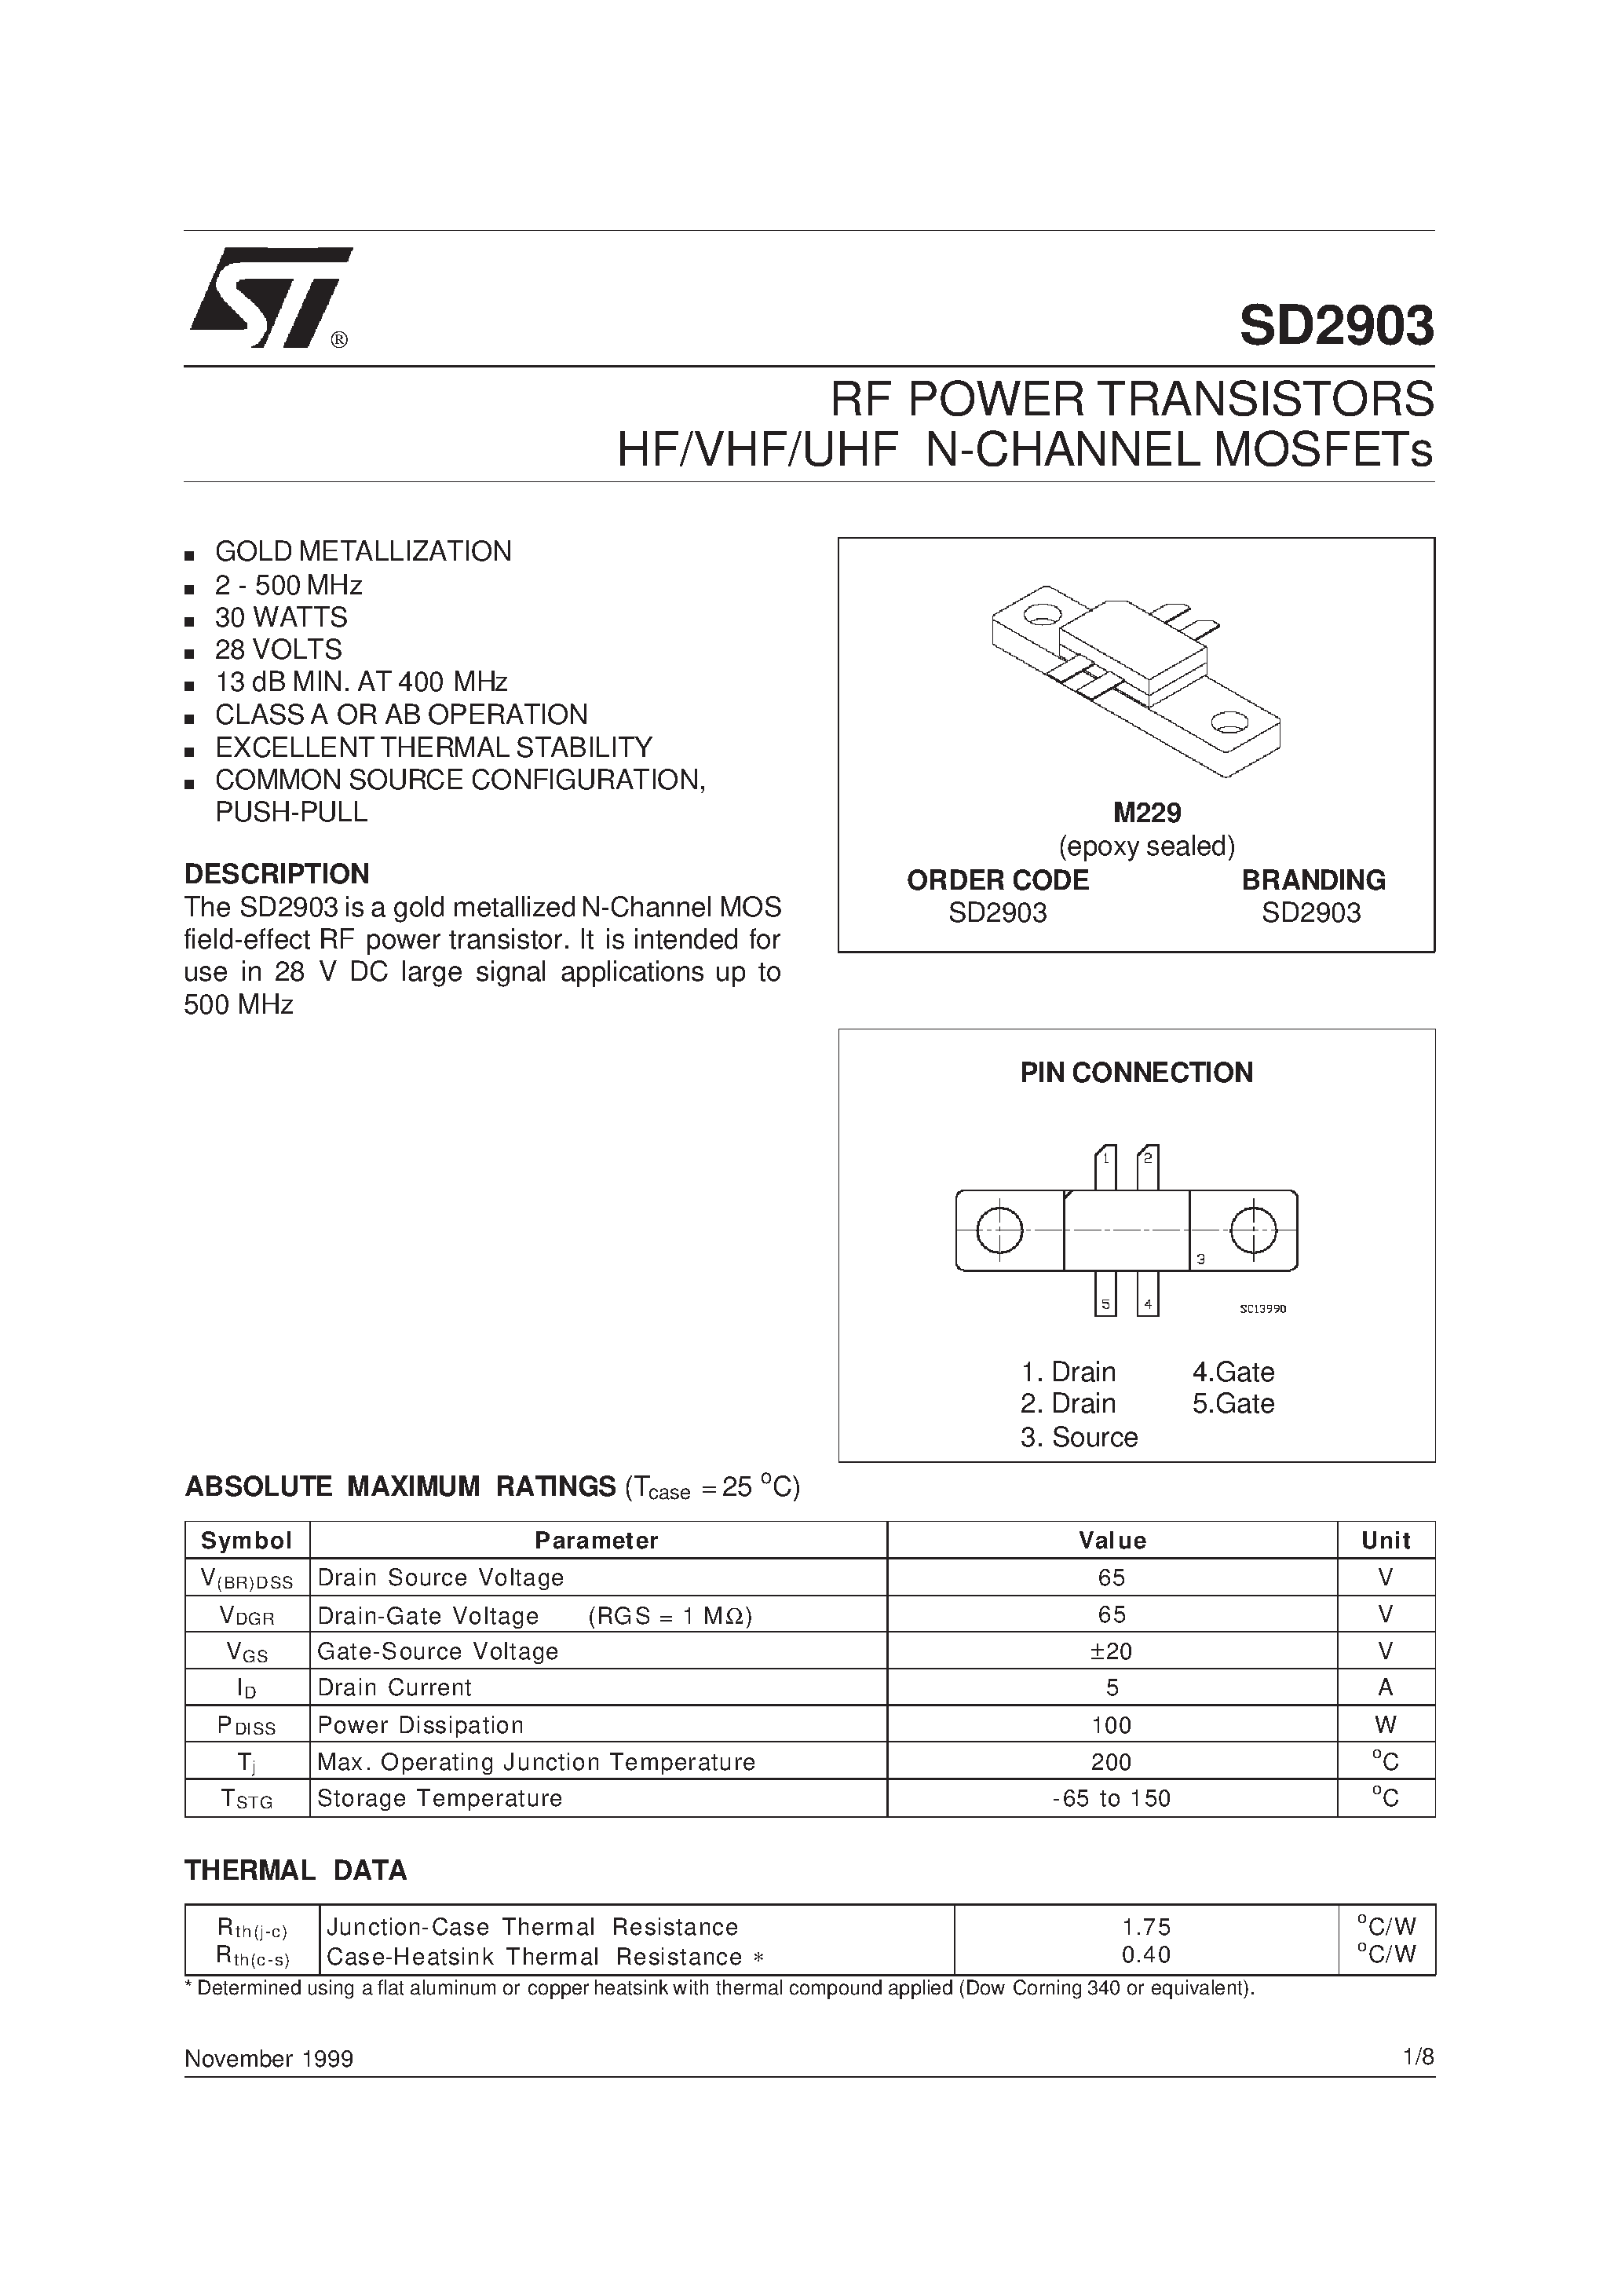 Datasheet SD2903 - RF POWER TRANSISTORS HF/VHF/UHF N-CHANNEL MOSFETs page 1